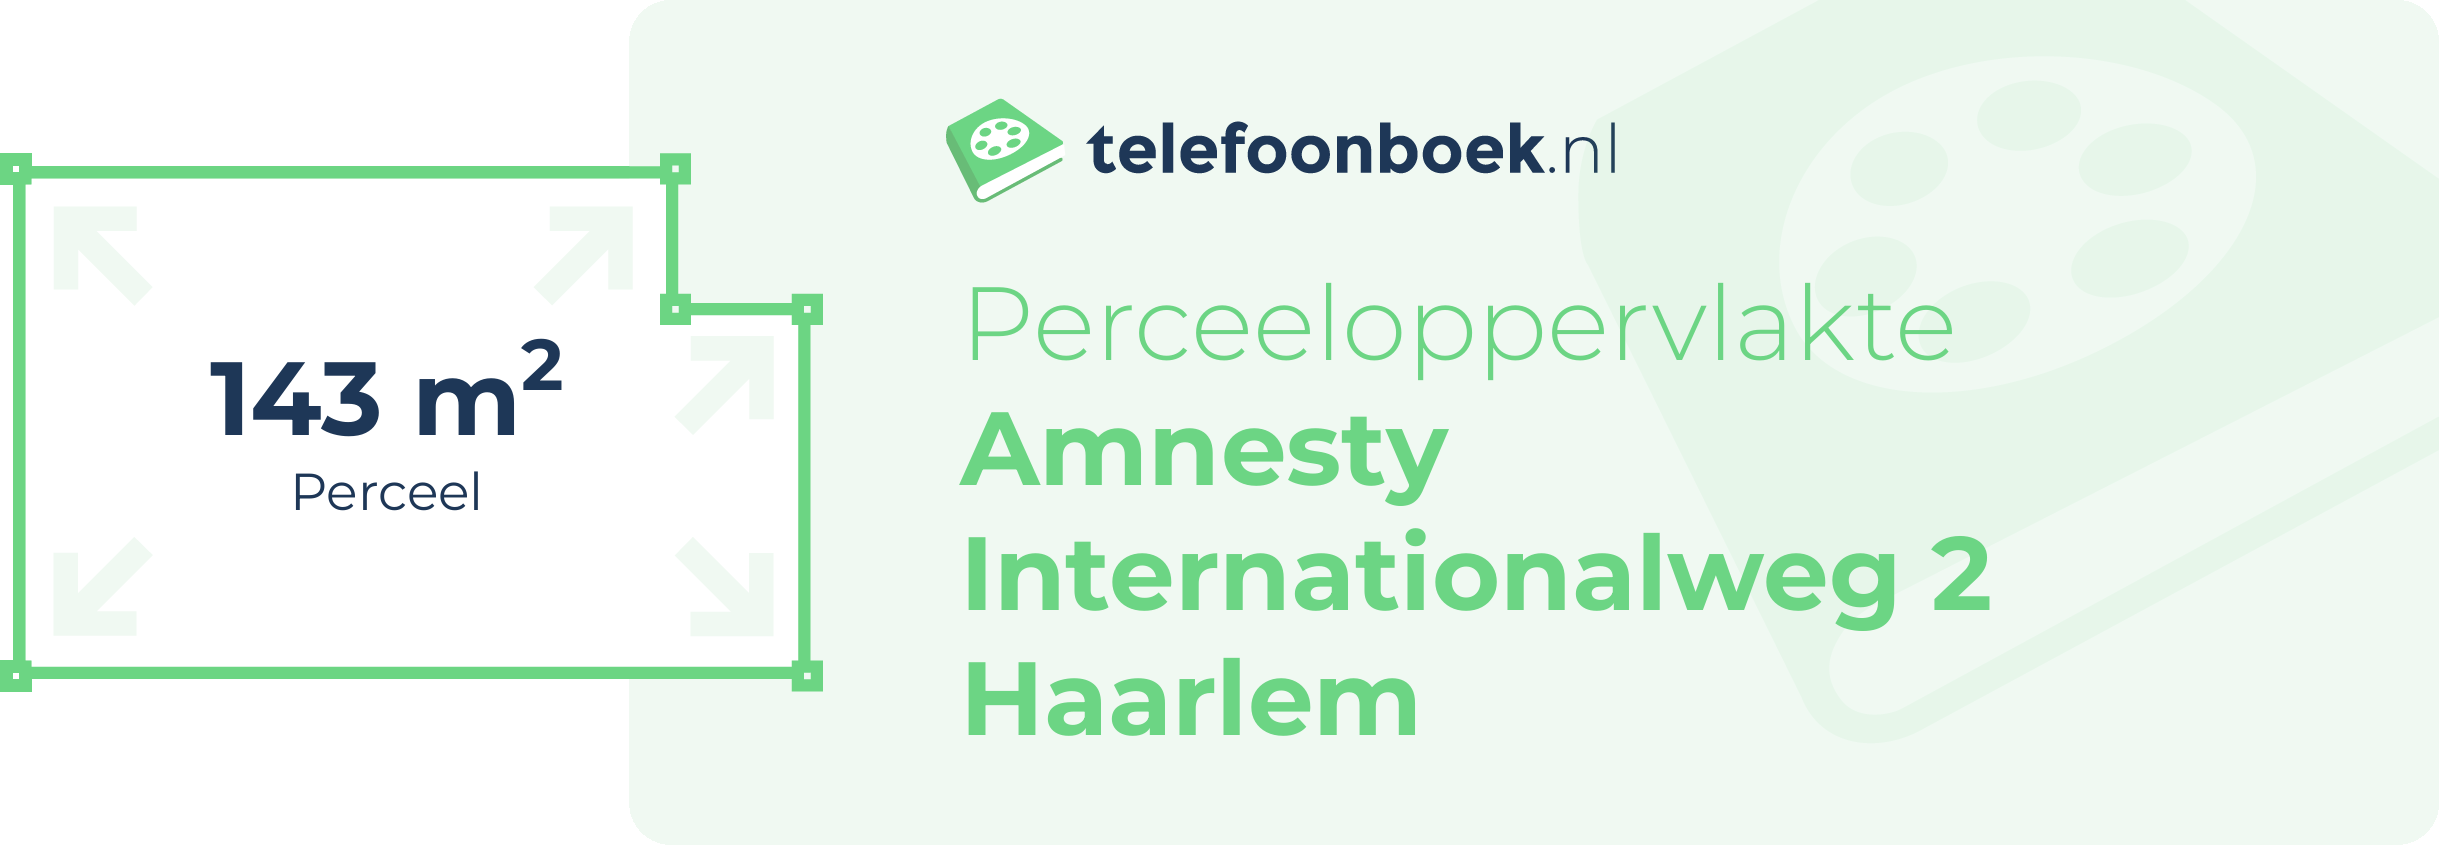 Perceeloppervlakte Amnesty Internationalweg 2 Haarlem